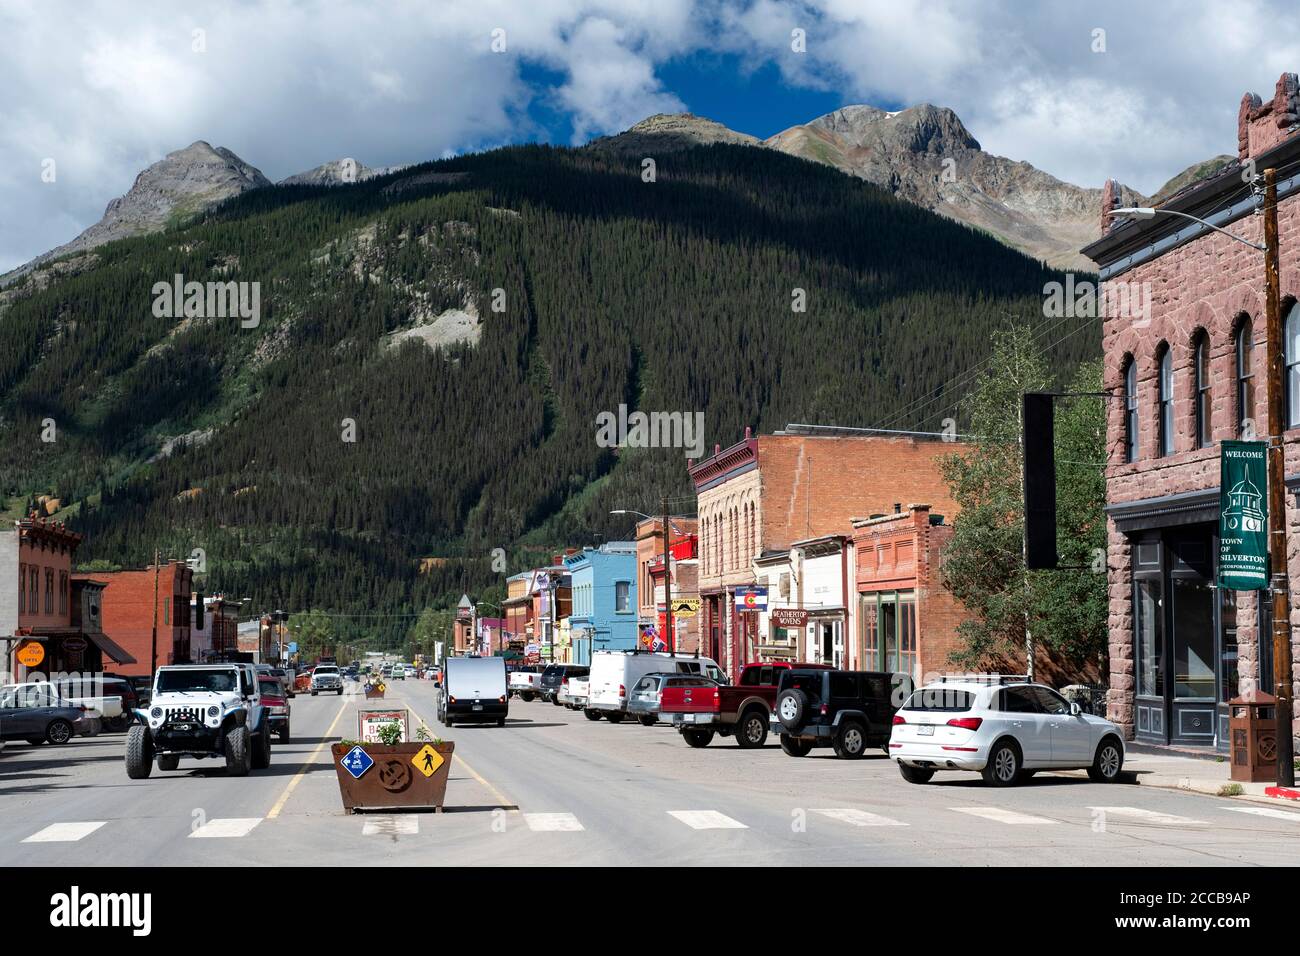 Historic mining town of Silverton, Colorado looking down Greene Street Stock Photo